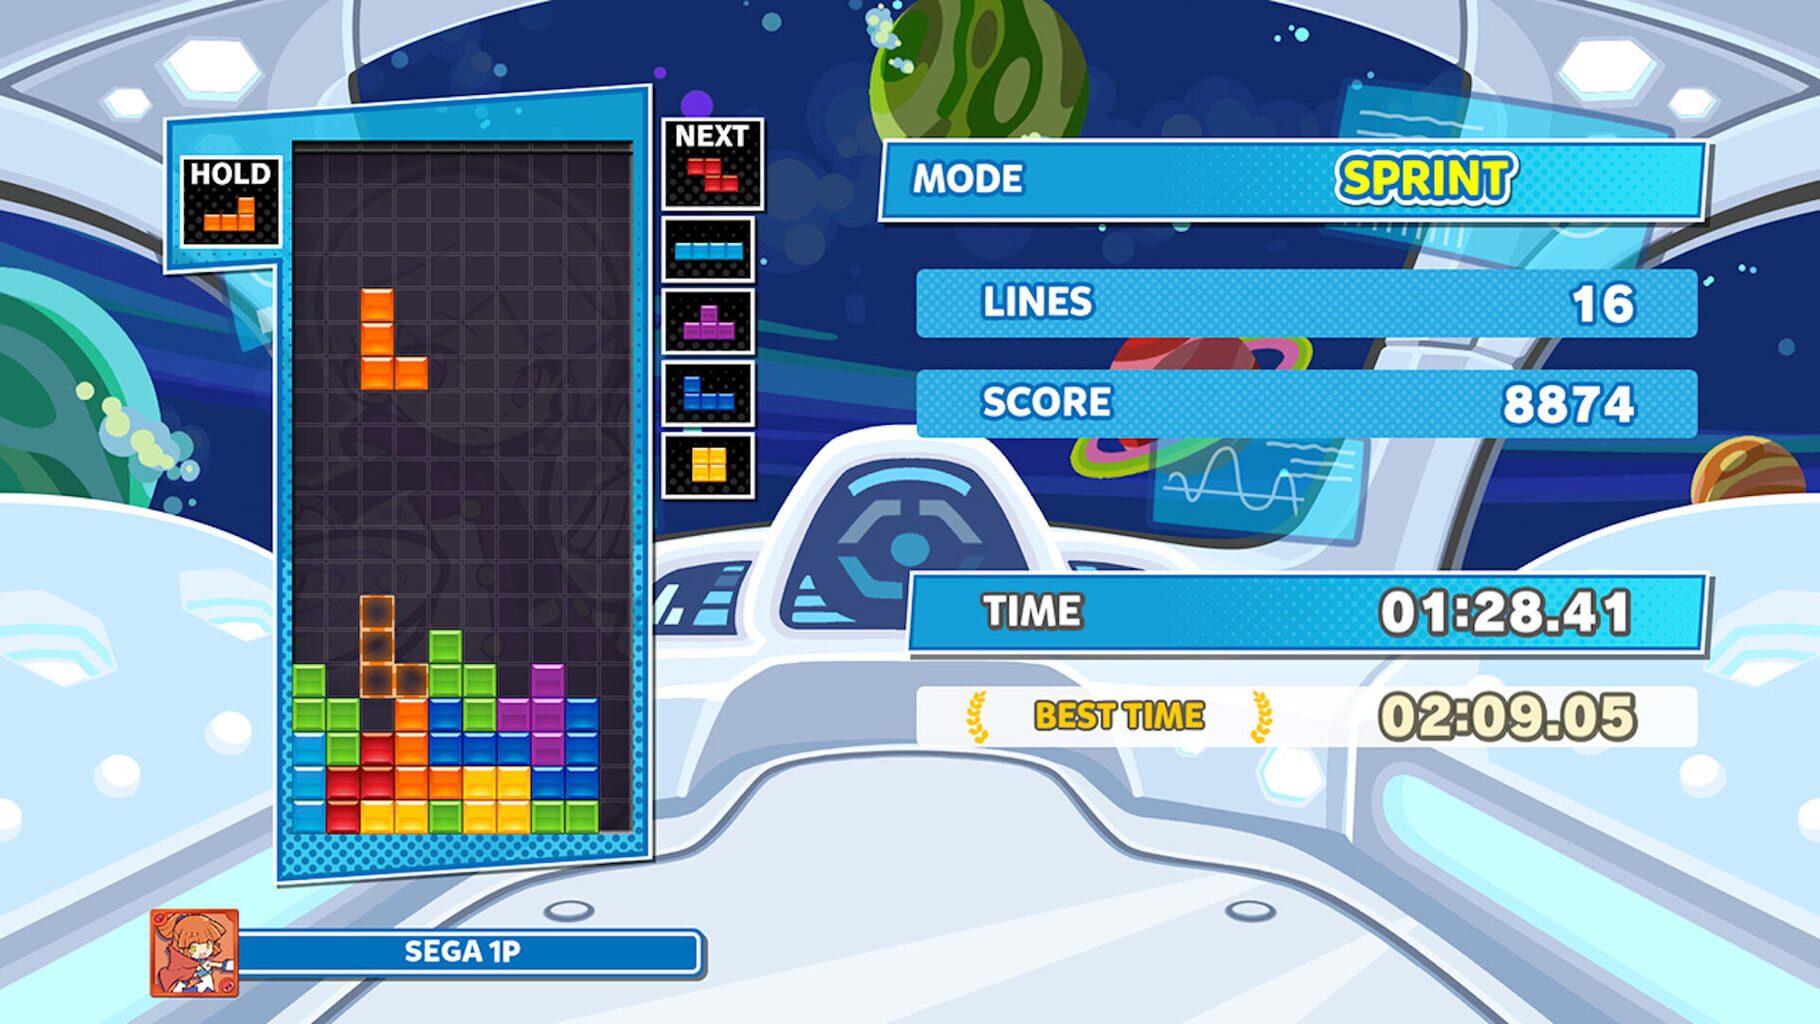 Captura de pantalla - Puyo Puyo Tetris 2